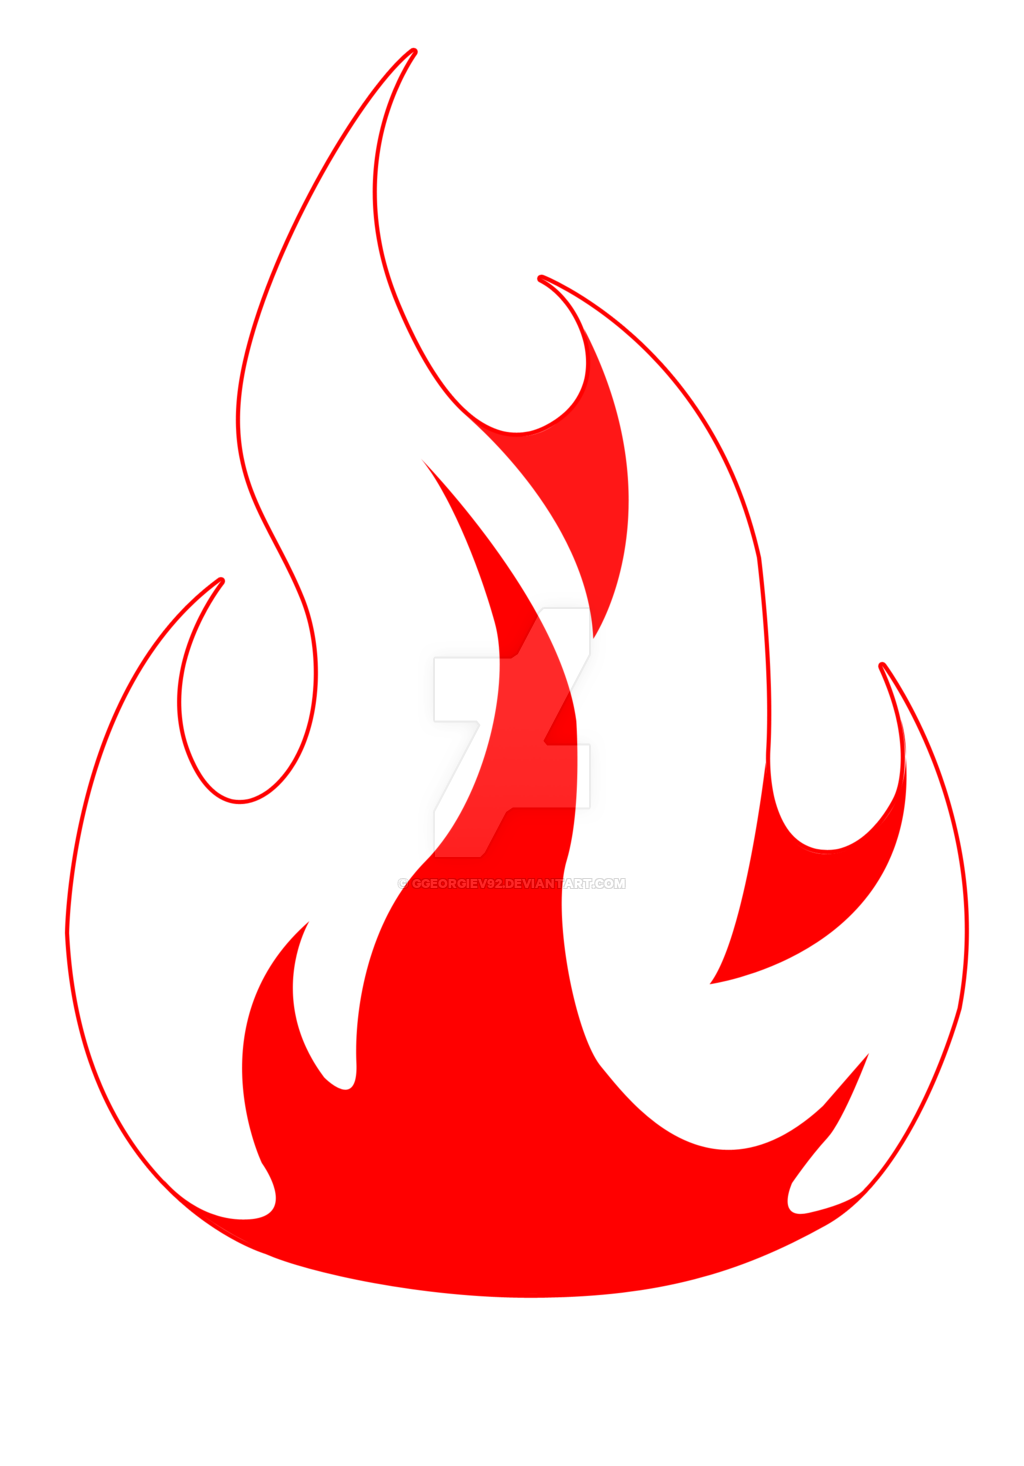 Flame Logo by ggeorgiev92 on DeviantArt